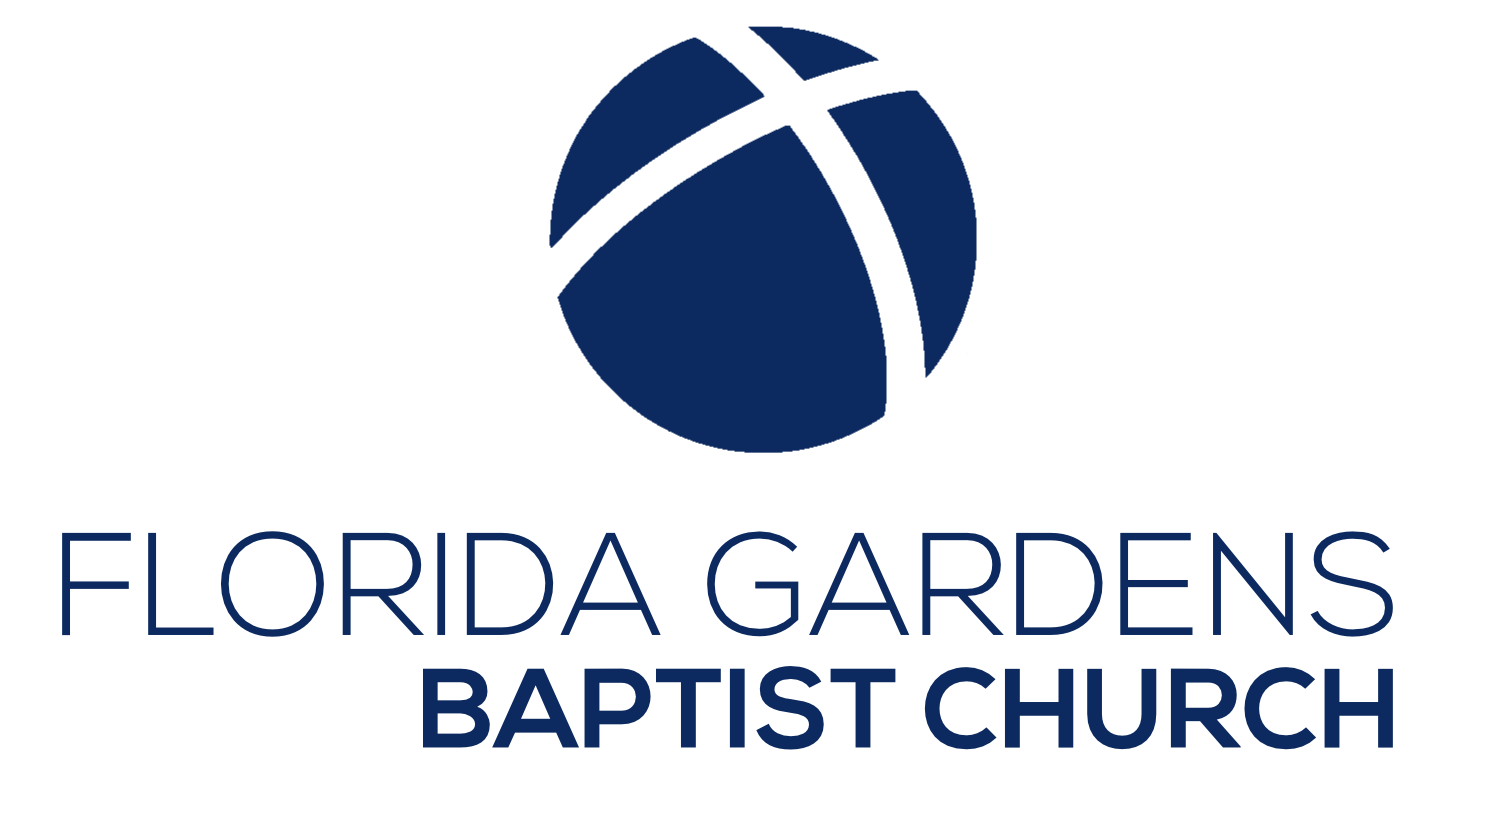 Florida Gardens Baptist Church